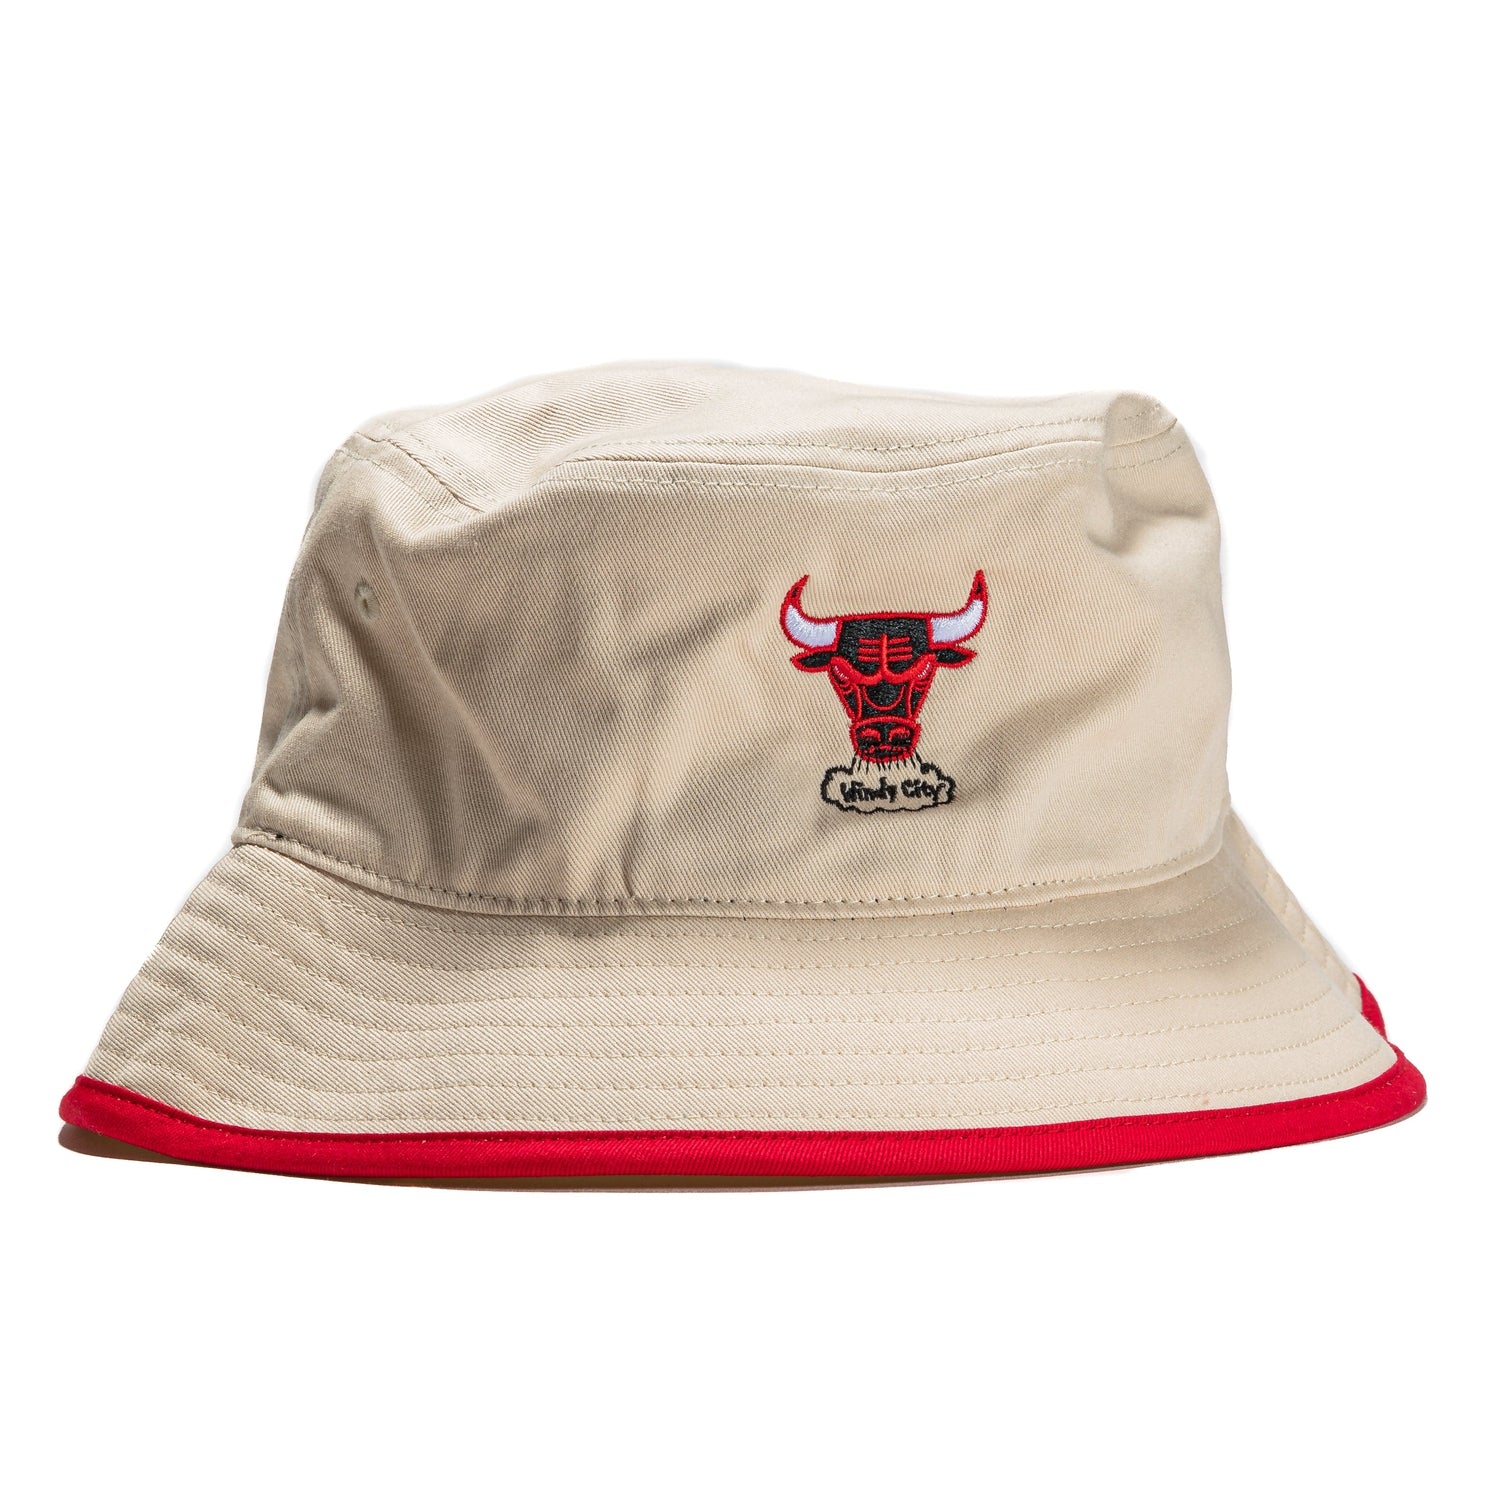 Mitchell & Ness Chicago Bulls NBA 50th Anniversary Snapback Hat Cap - Off  White/Black/Red